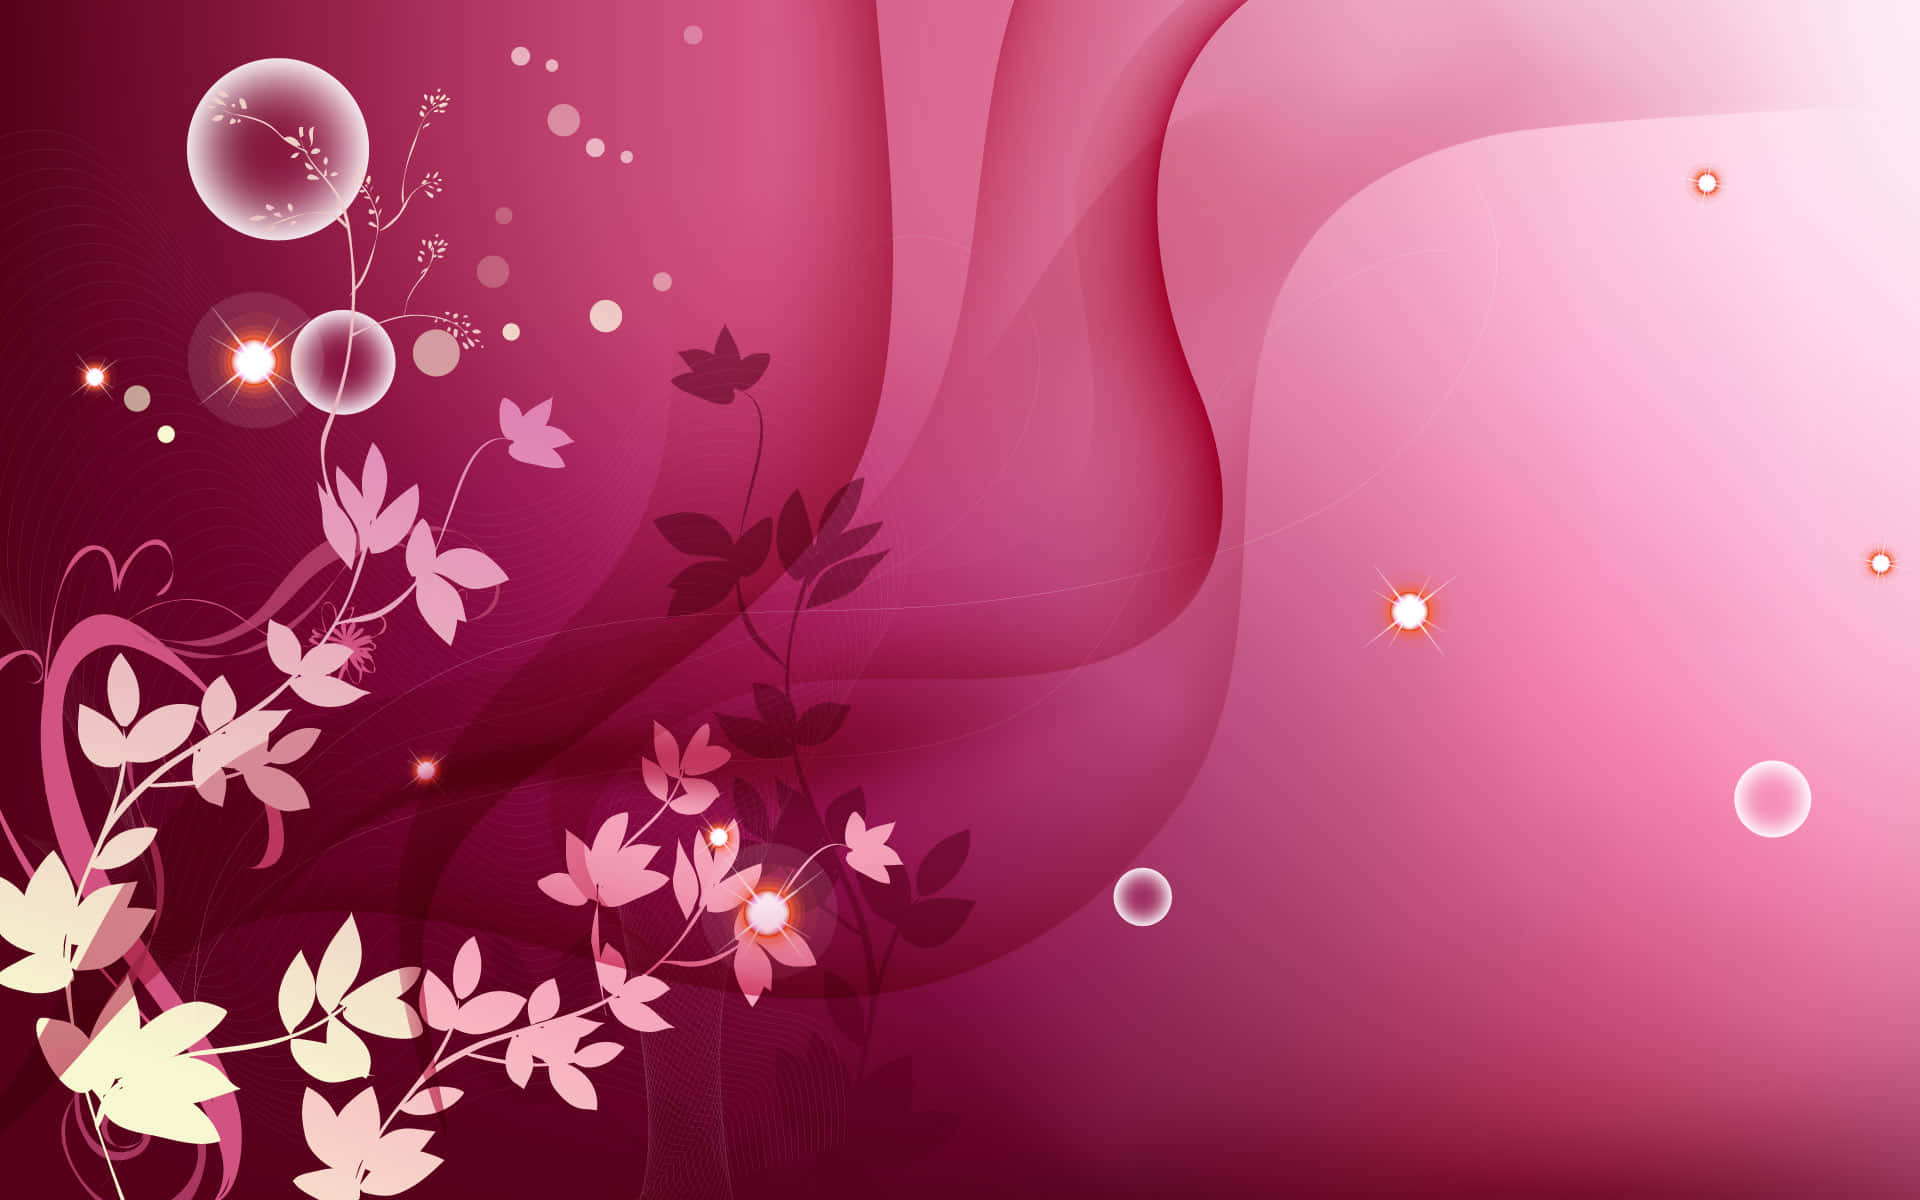 Captivating Pink Abstract Design Wallpaper